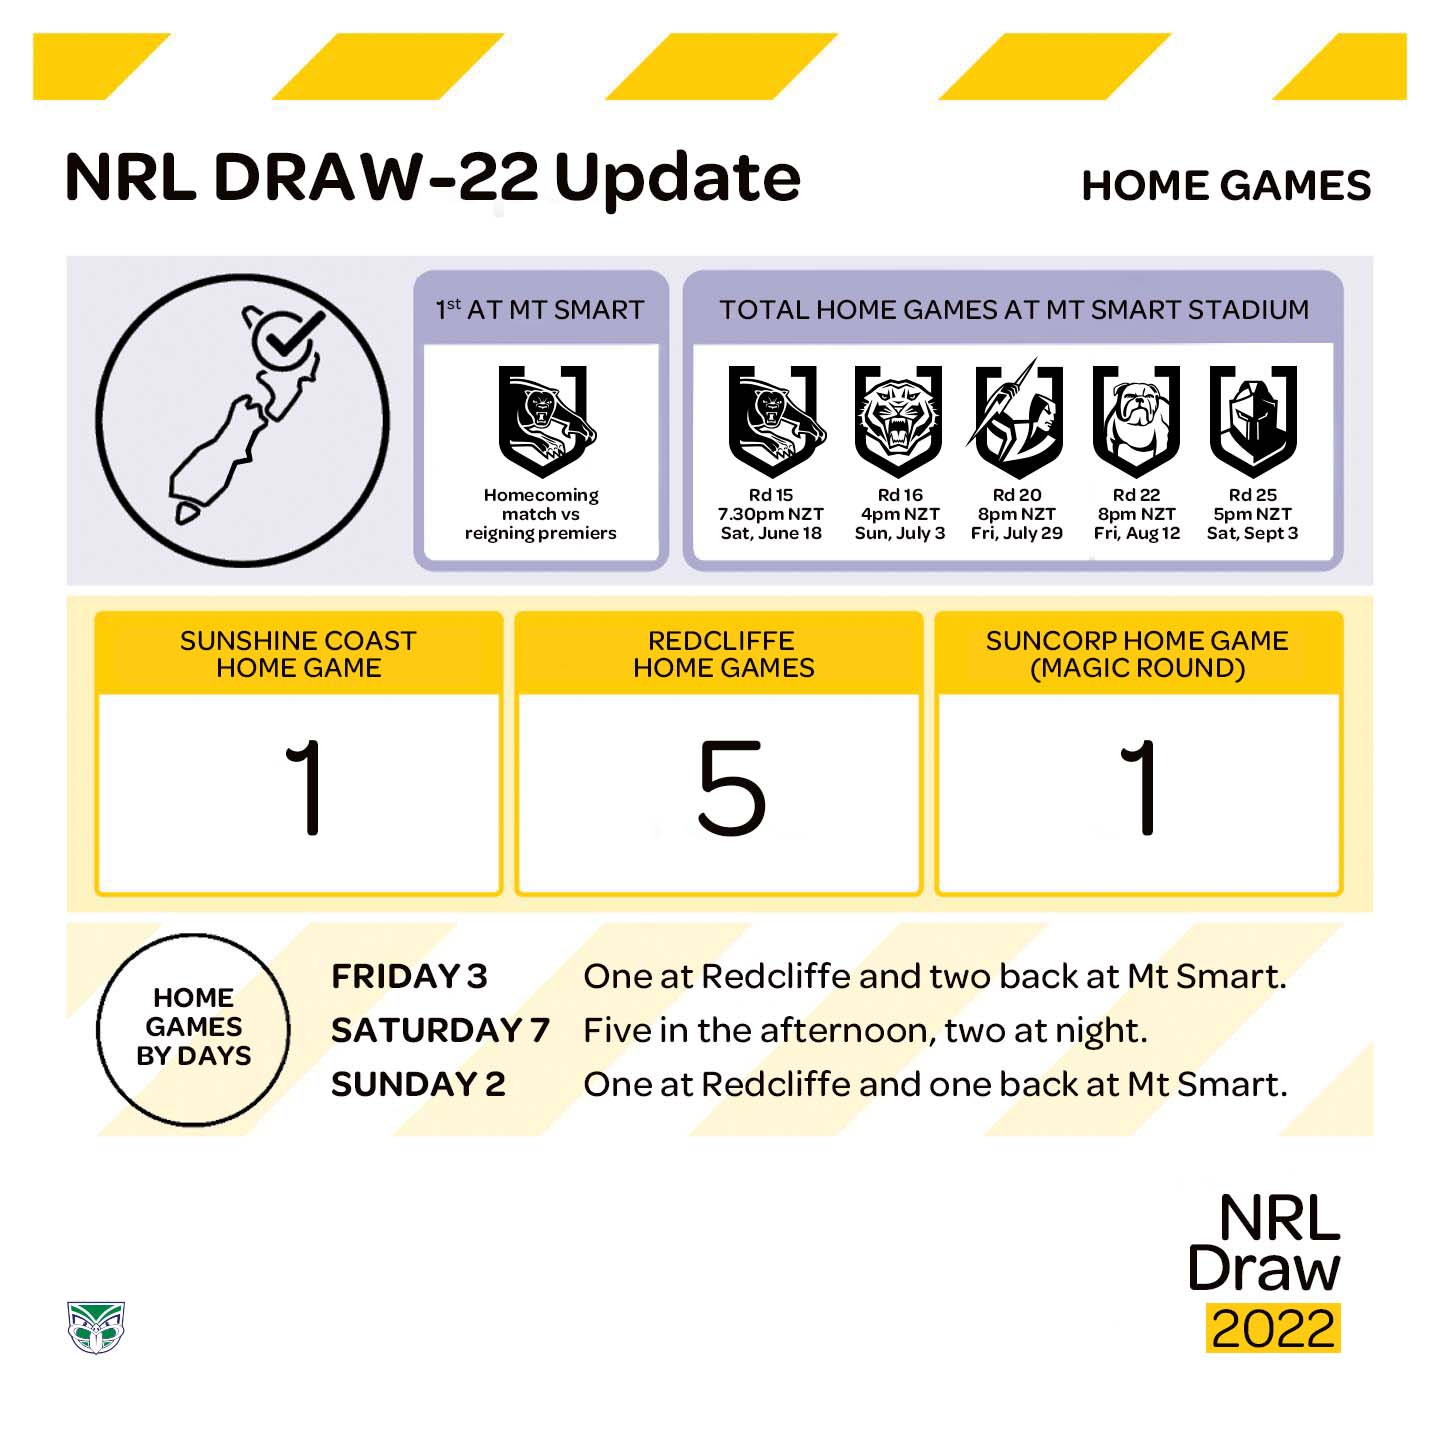 2022 NRL Draw announced